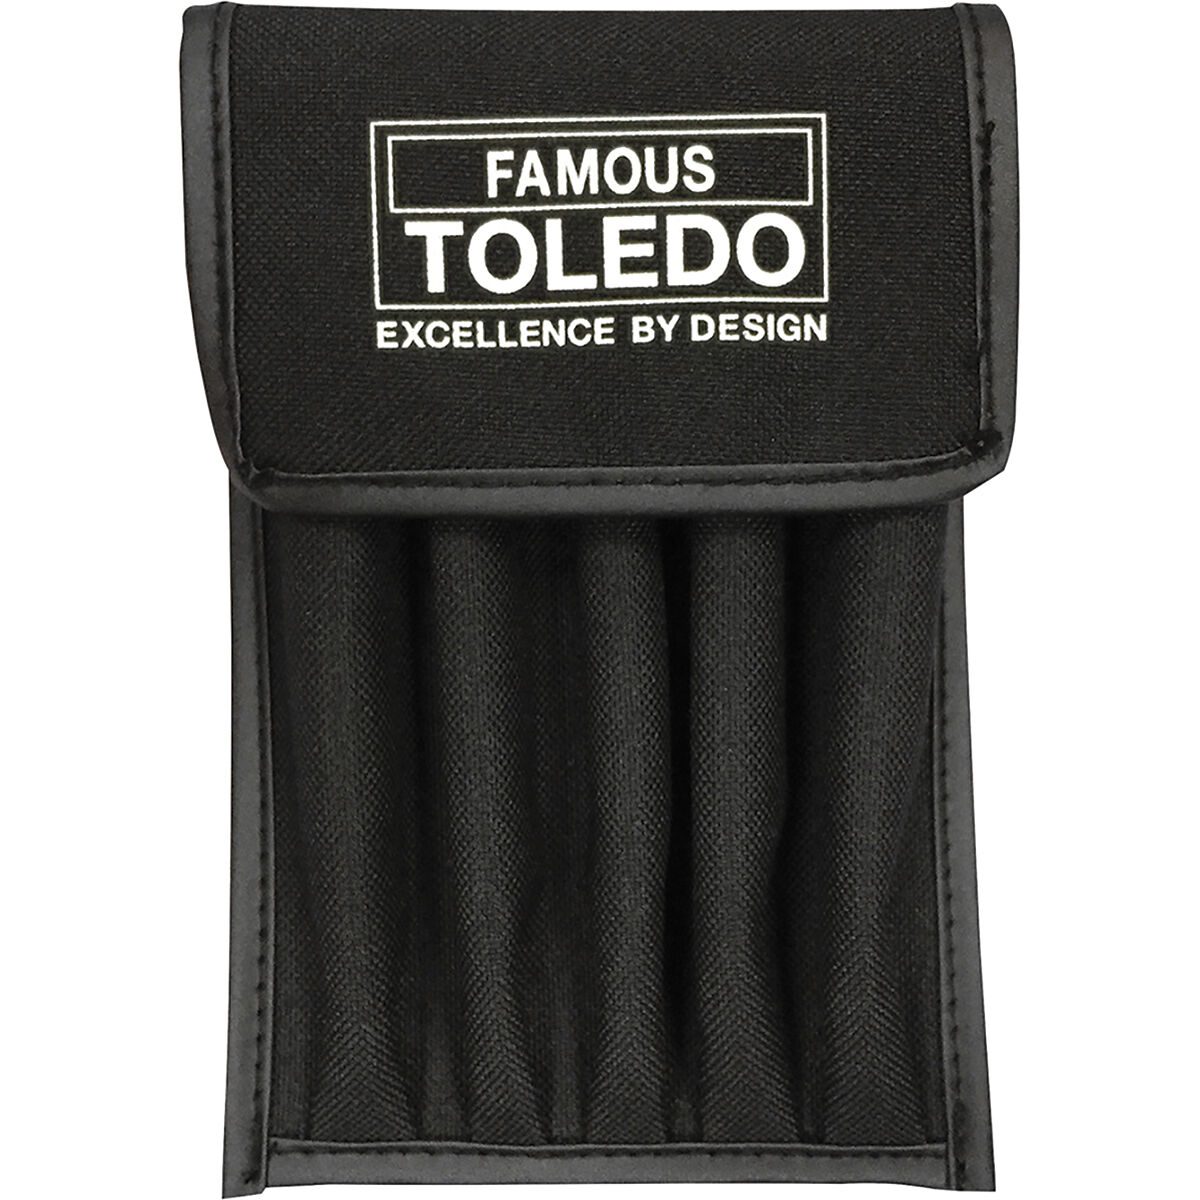 Toledo Tools - Toledo Rulers, Toledo Pliers, Files & More